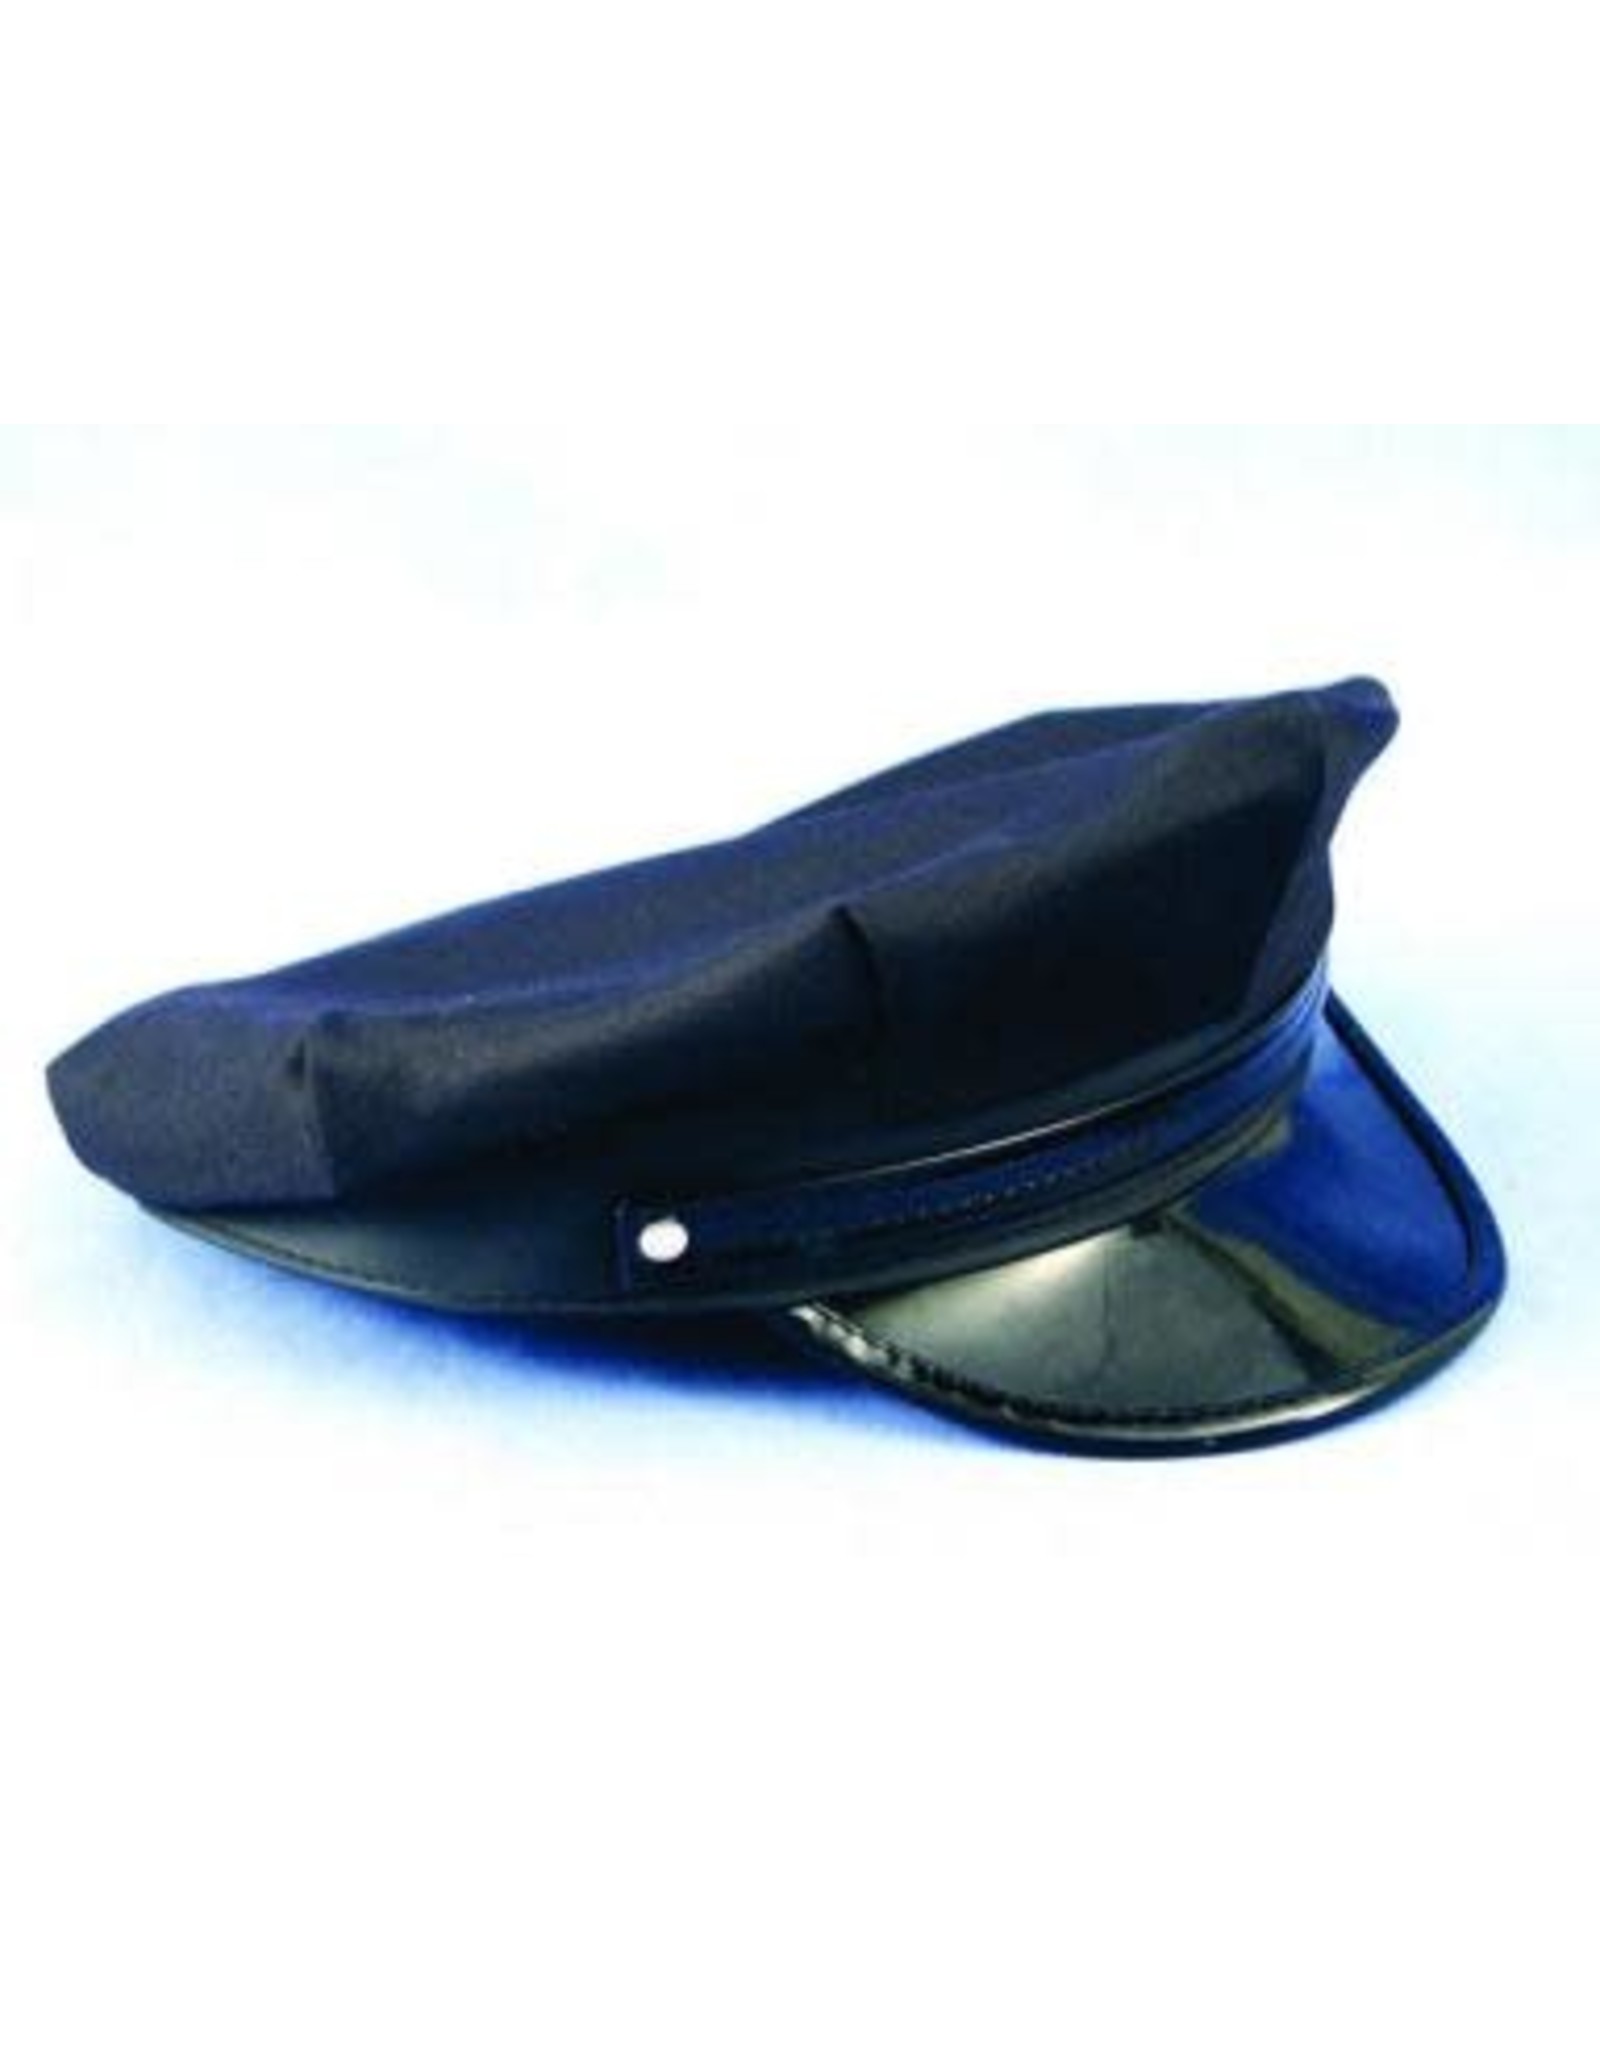 HM Smallwares Black Police/Chauffeur Hat